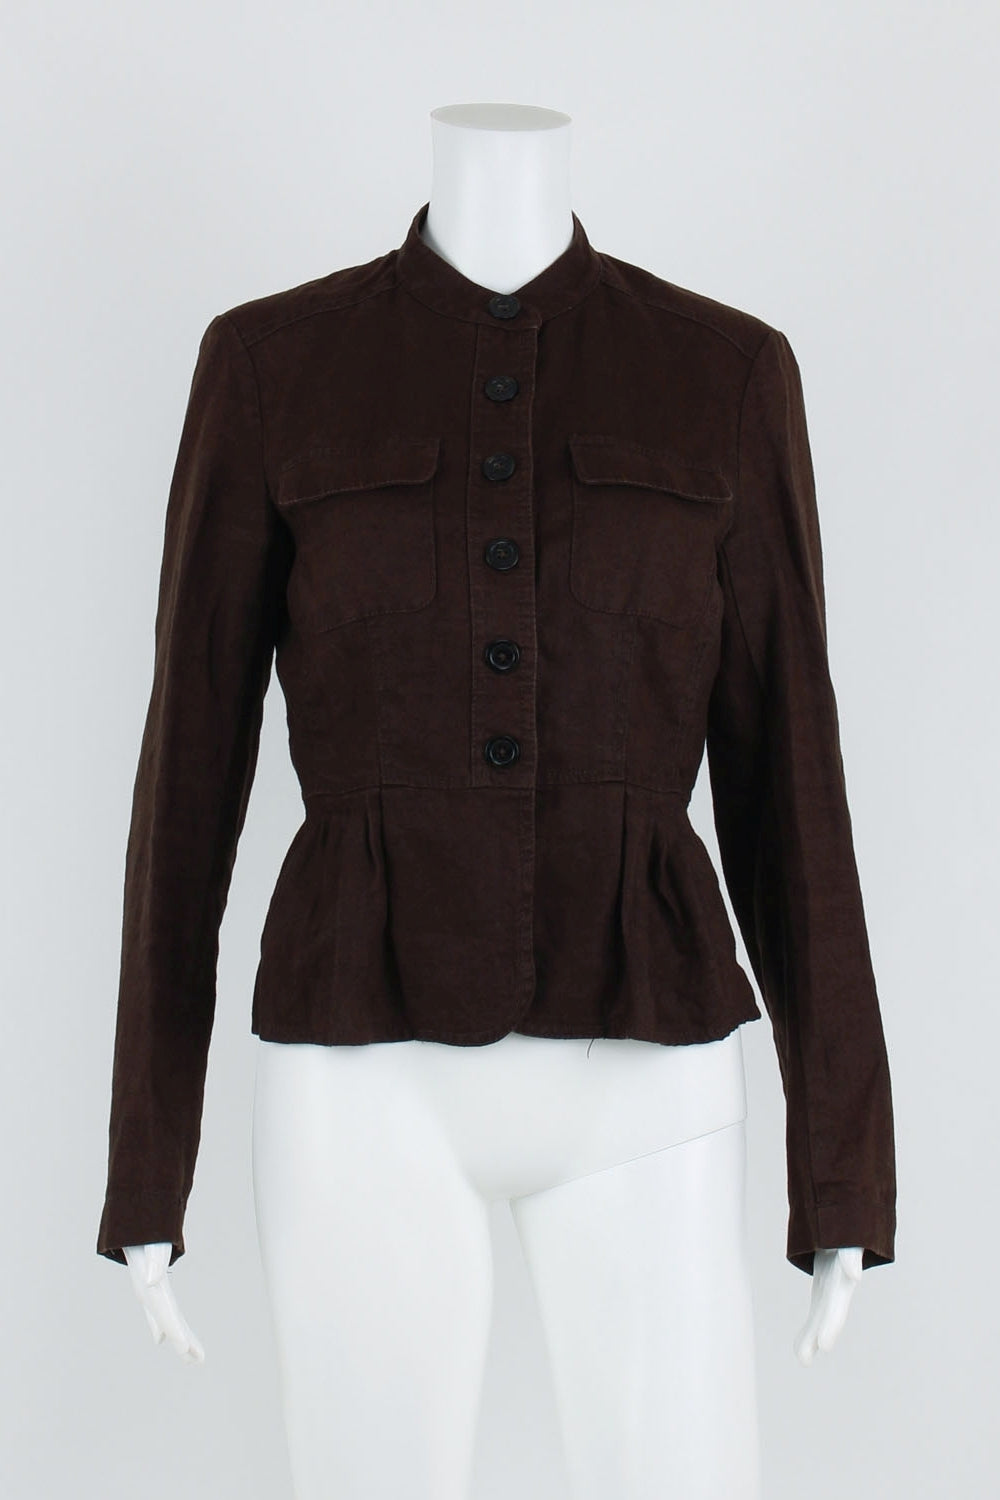 Michael Kors Brown Button Front Linen Jacket 6